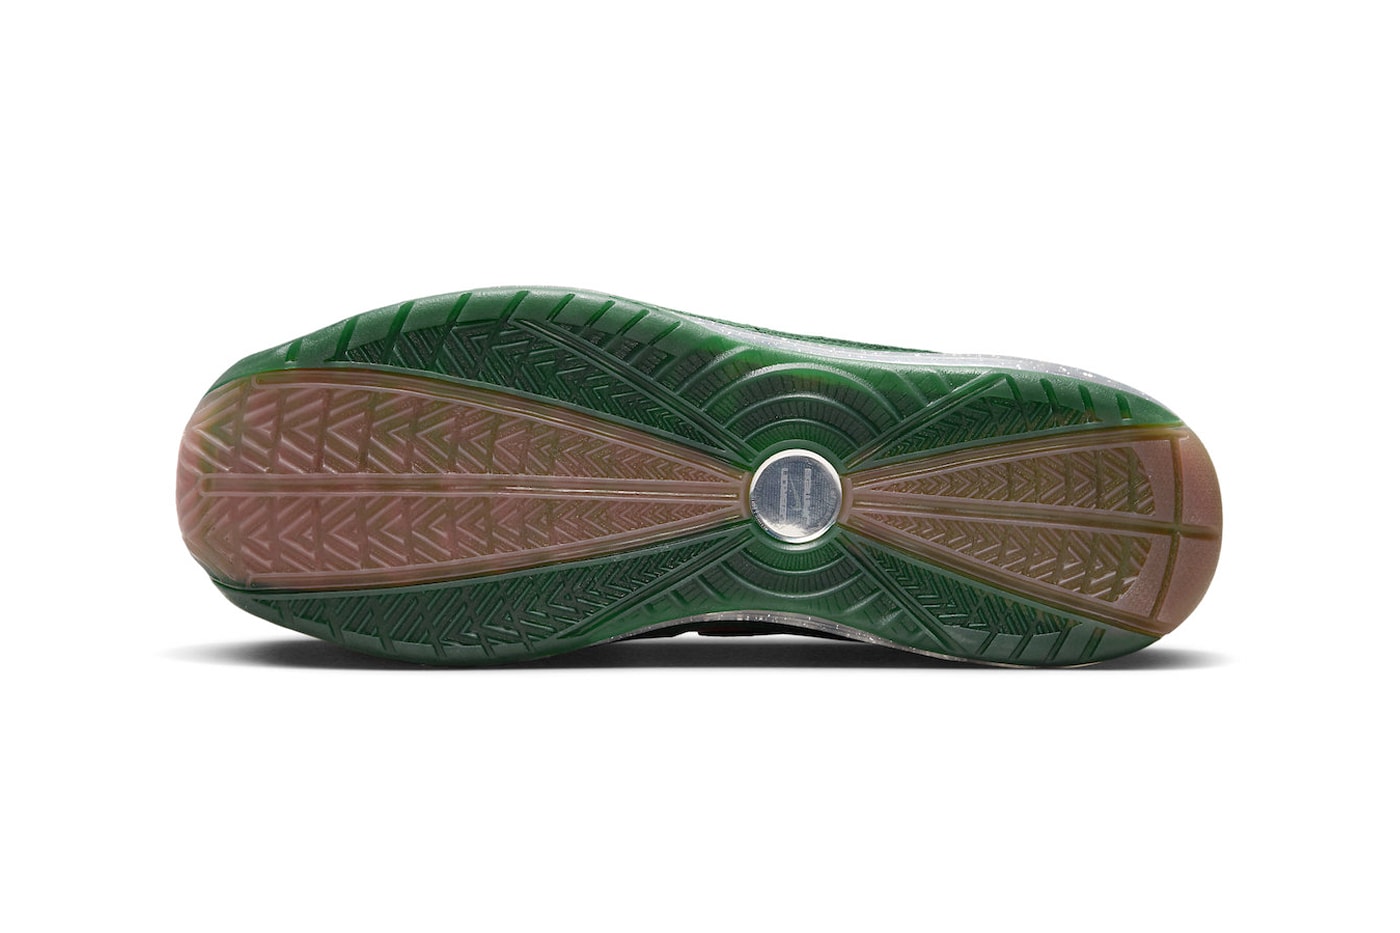 Nike Lebron 7 Florida AM gorge green team orange white DX8554 300 release info date price 200 USD FAMU 